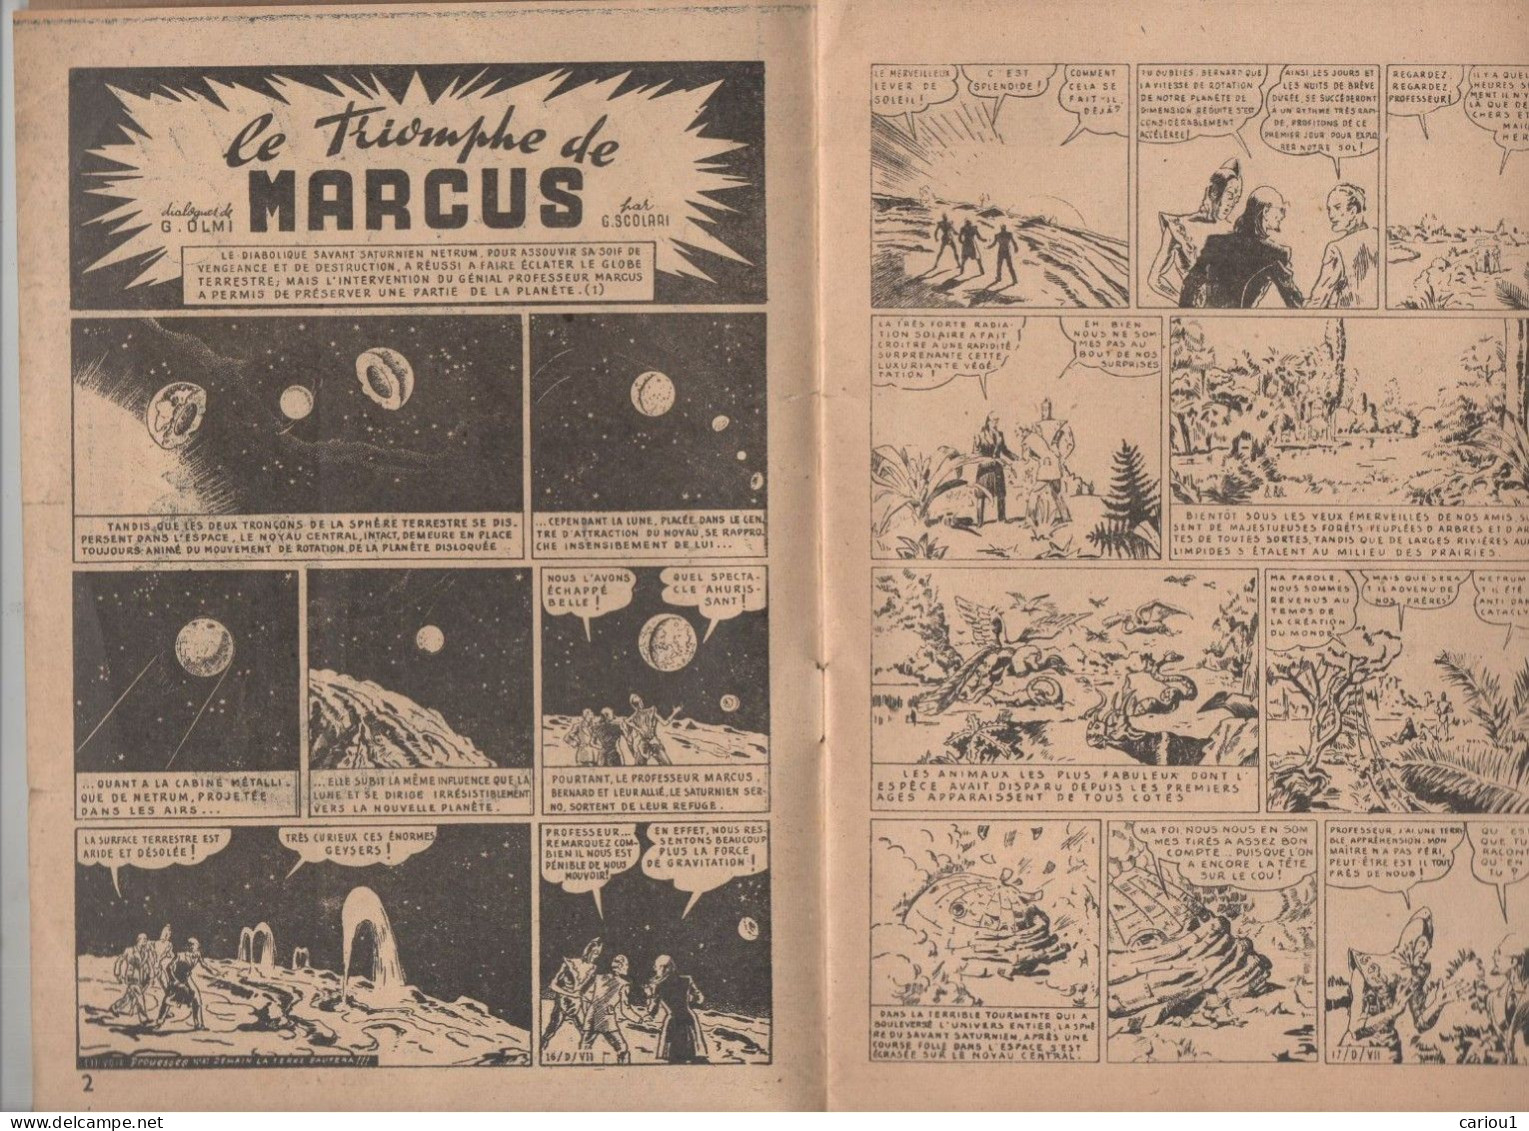 C1 SCOLARI Triomphe Marcus SELECTIONS PROUESSES # 2 1948 Saturne Contre Terre SF Port Inclus France - Antes De 1950